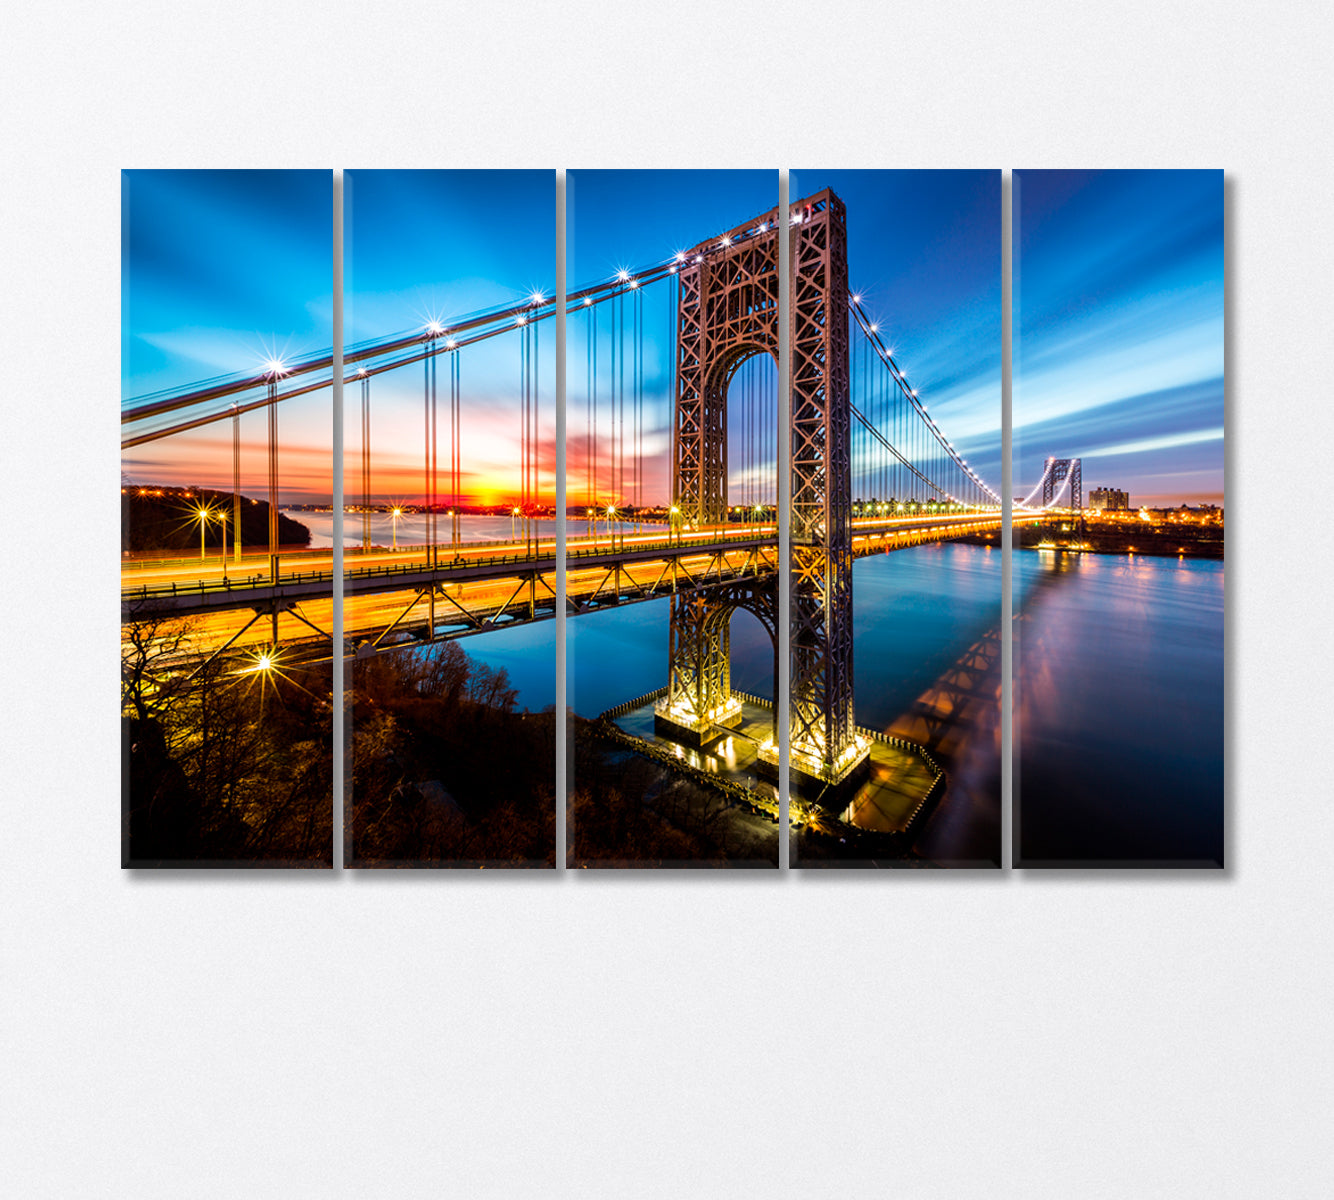 George Washington Bridge at Sunset Canvas Print-Canvas Print-CetArt-5 Panels-36x24 inches-CetArt